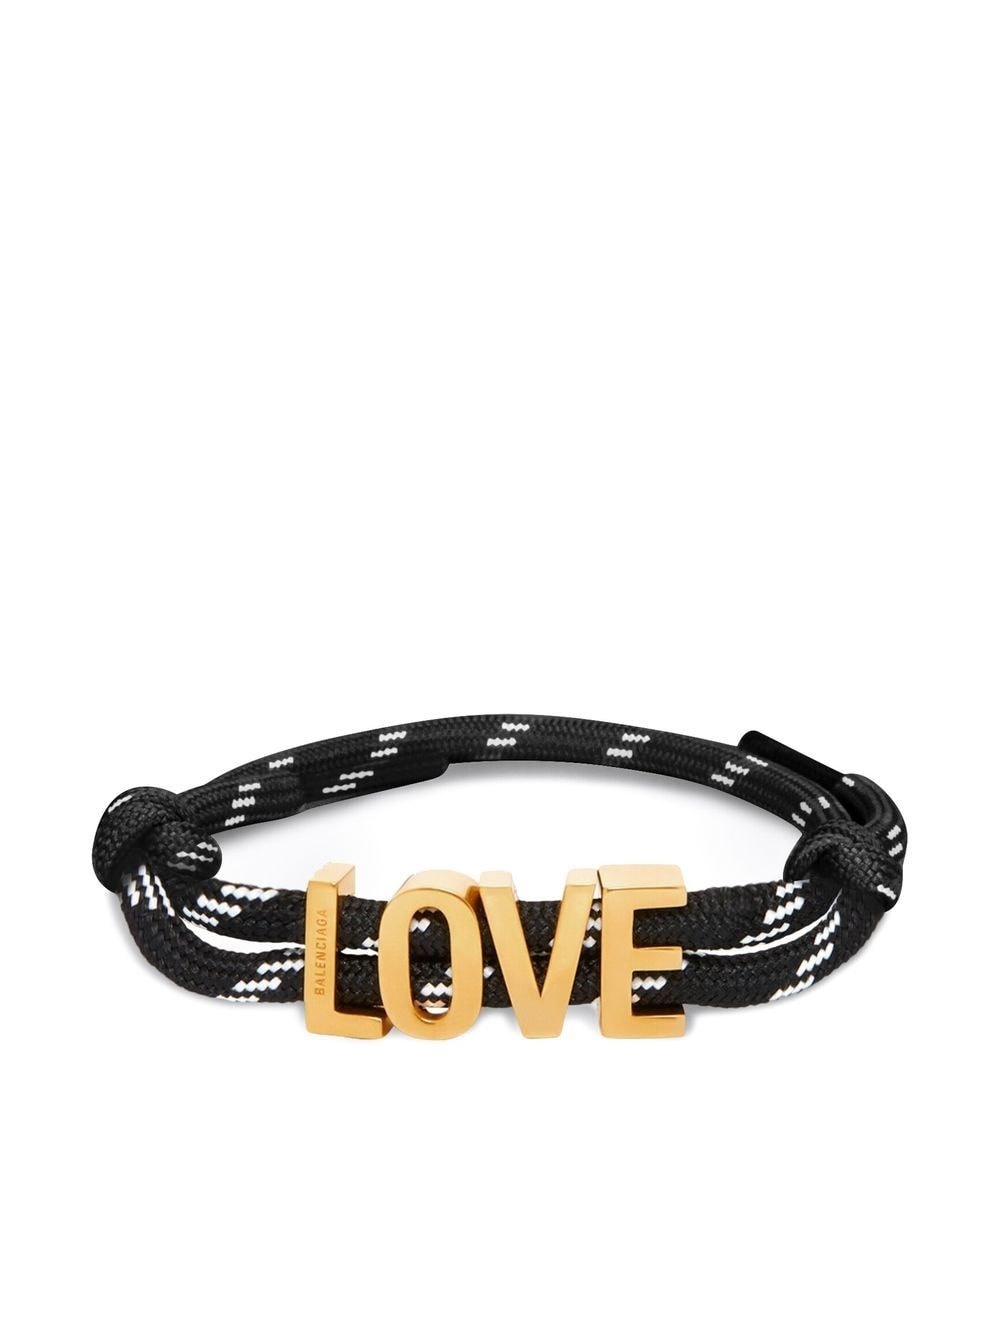 L.O.V.E. cord bracelet - 1